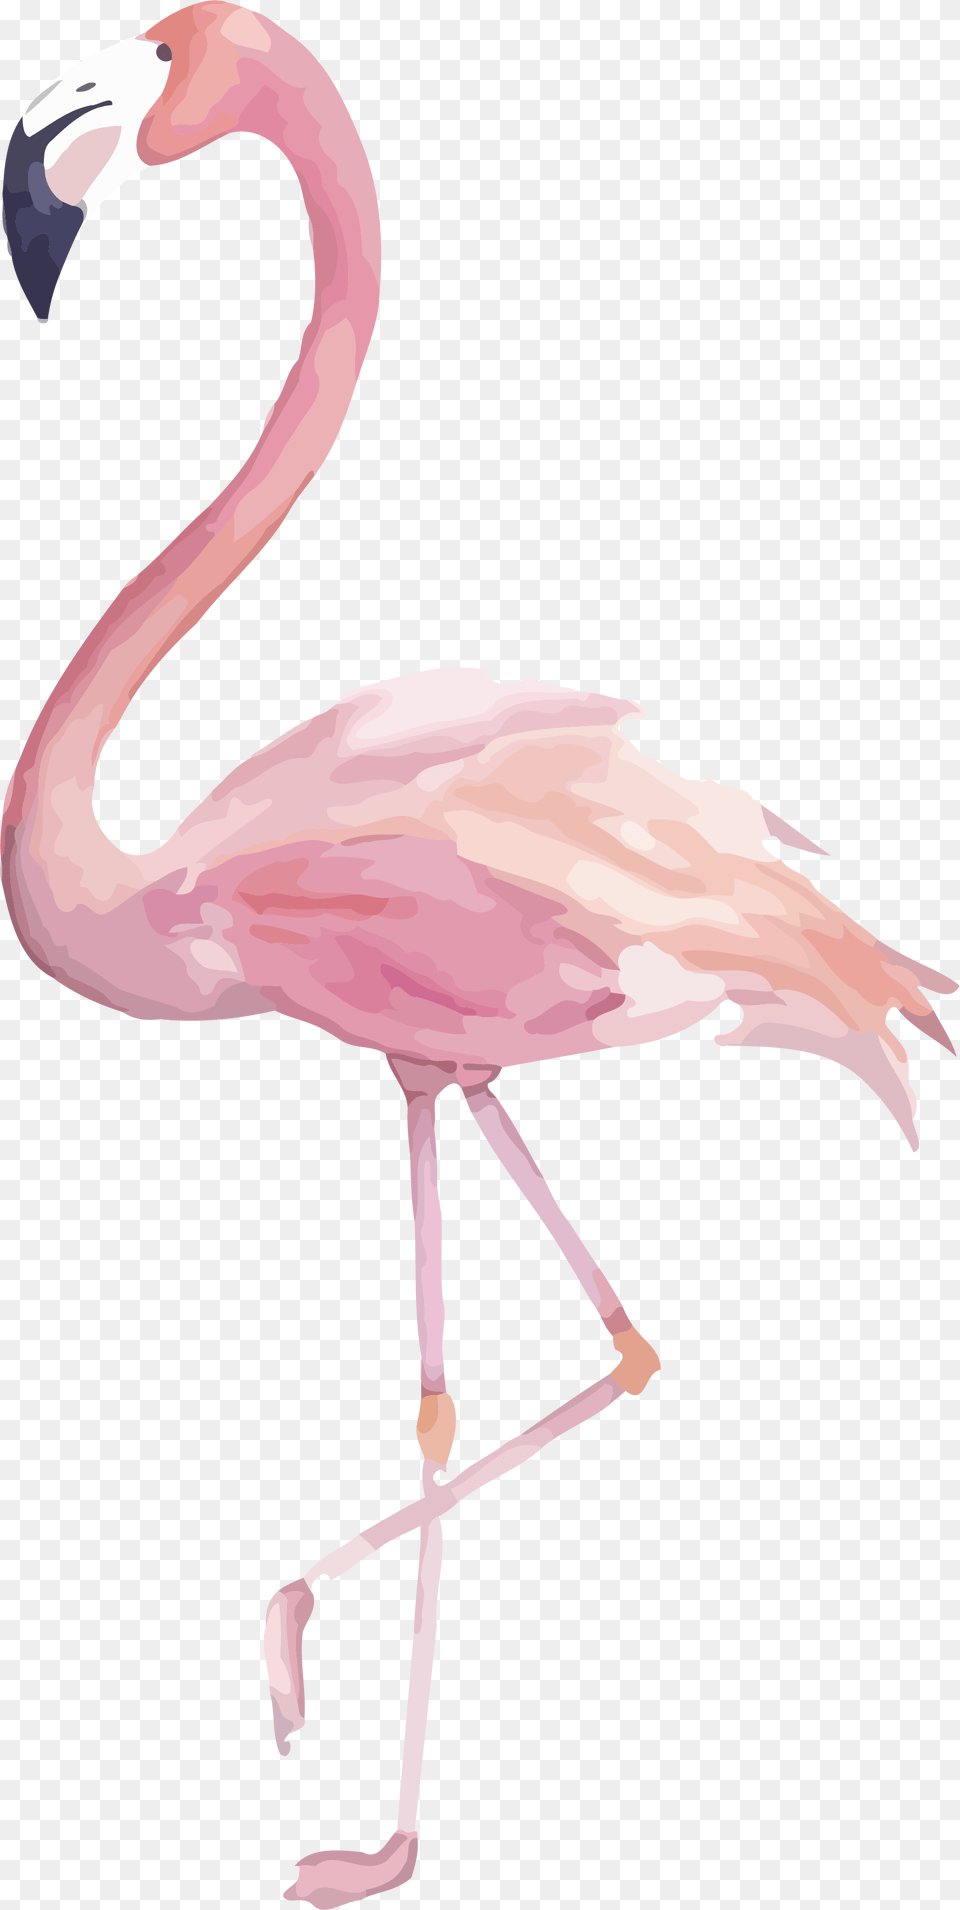 Flamingo Image Flamingo Clipart Watercolor Watercolor Flamingo Clipart, Animal, Bird, Dinosaur, Reptile Png